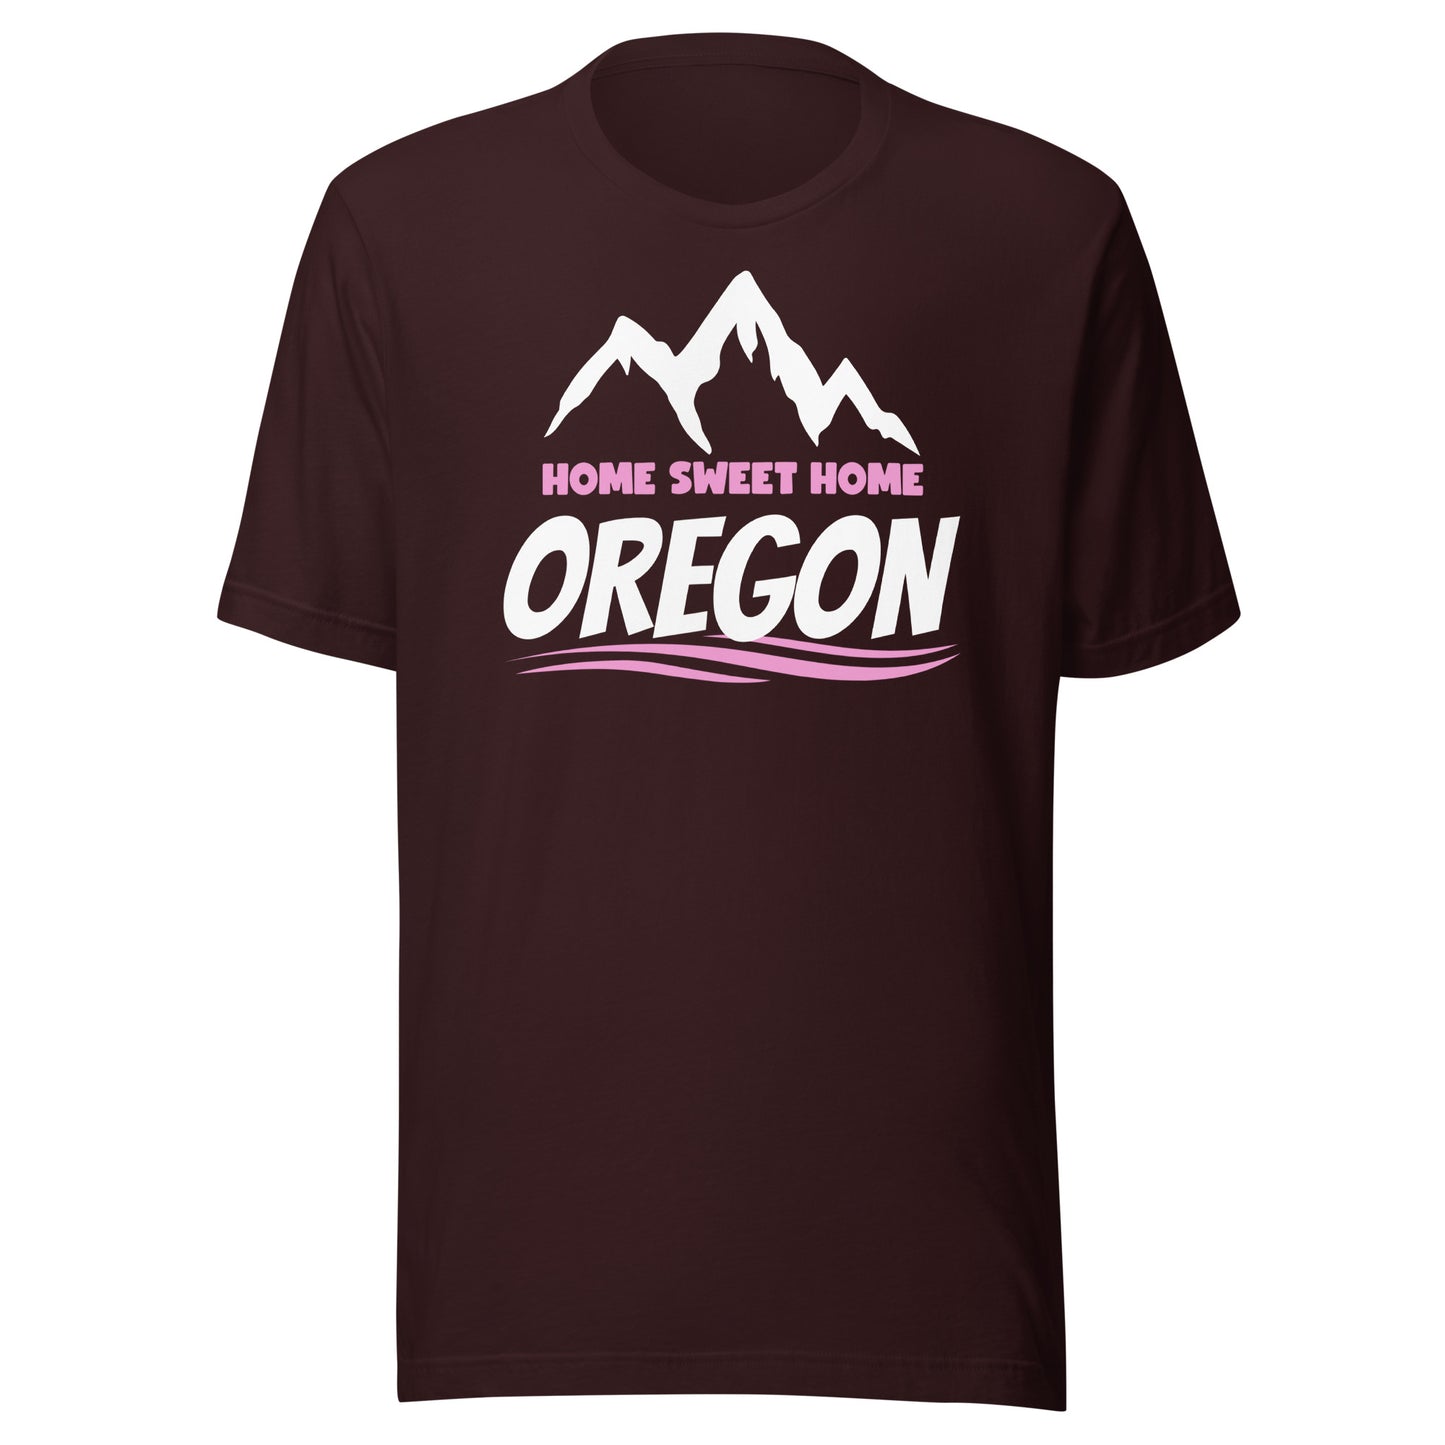 Home Sweet Home Oregon/Pink - Unisex t-shirt